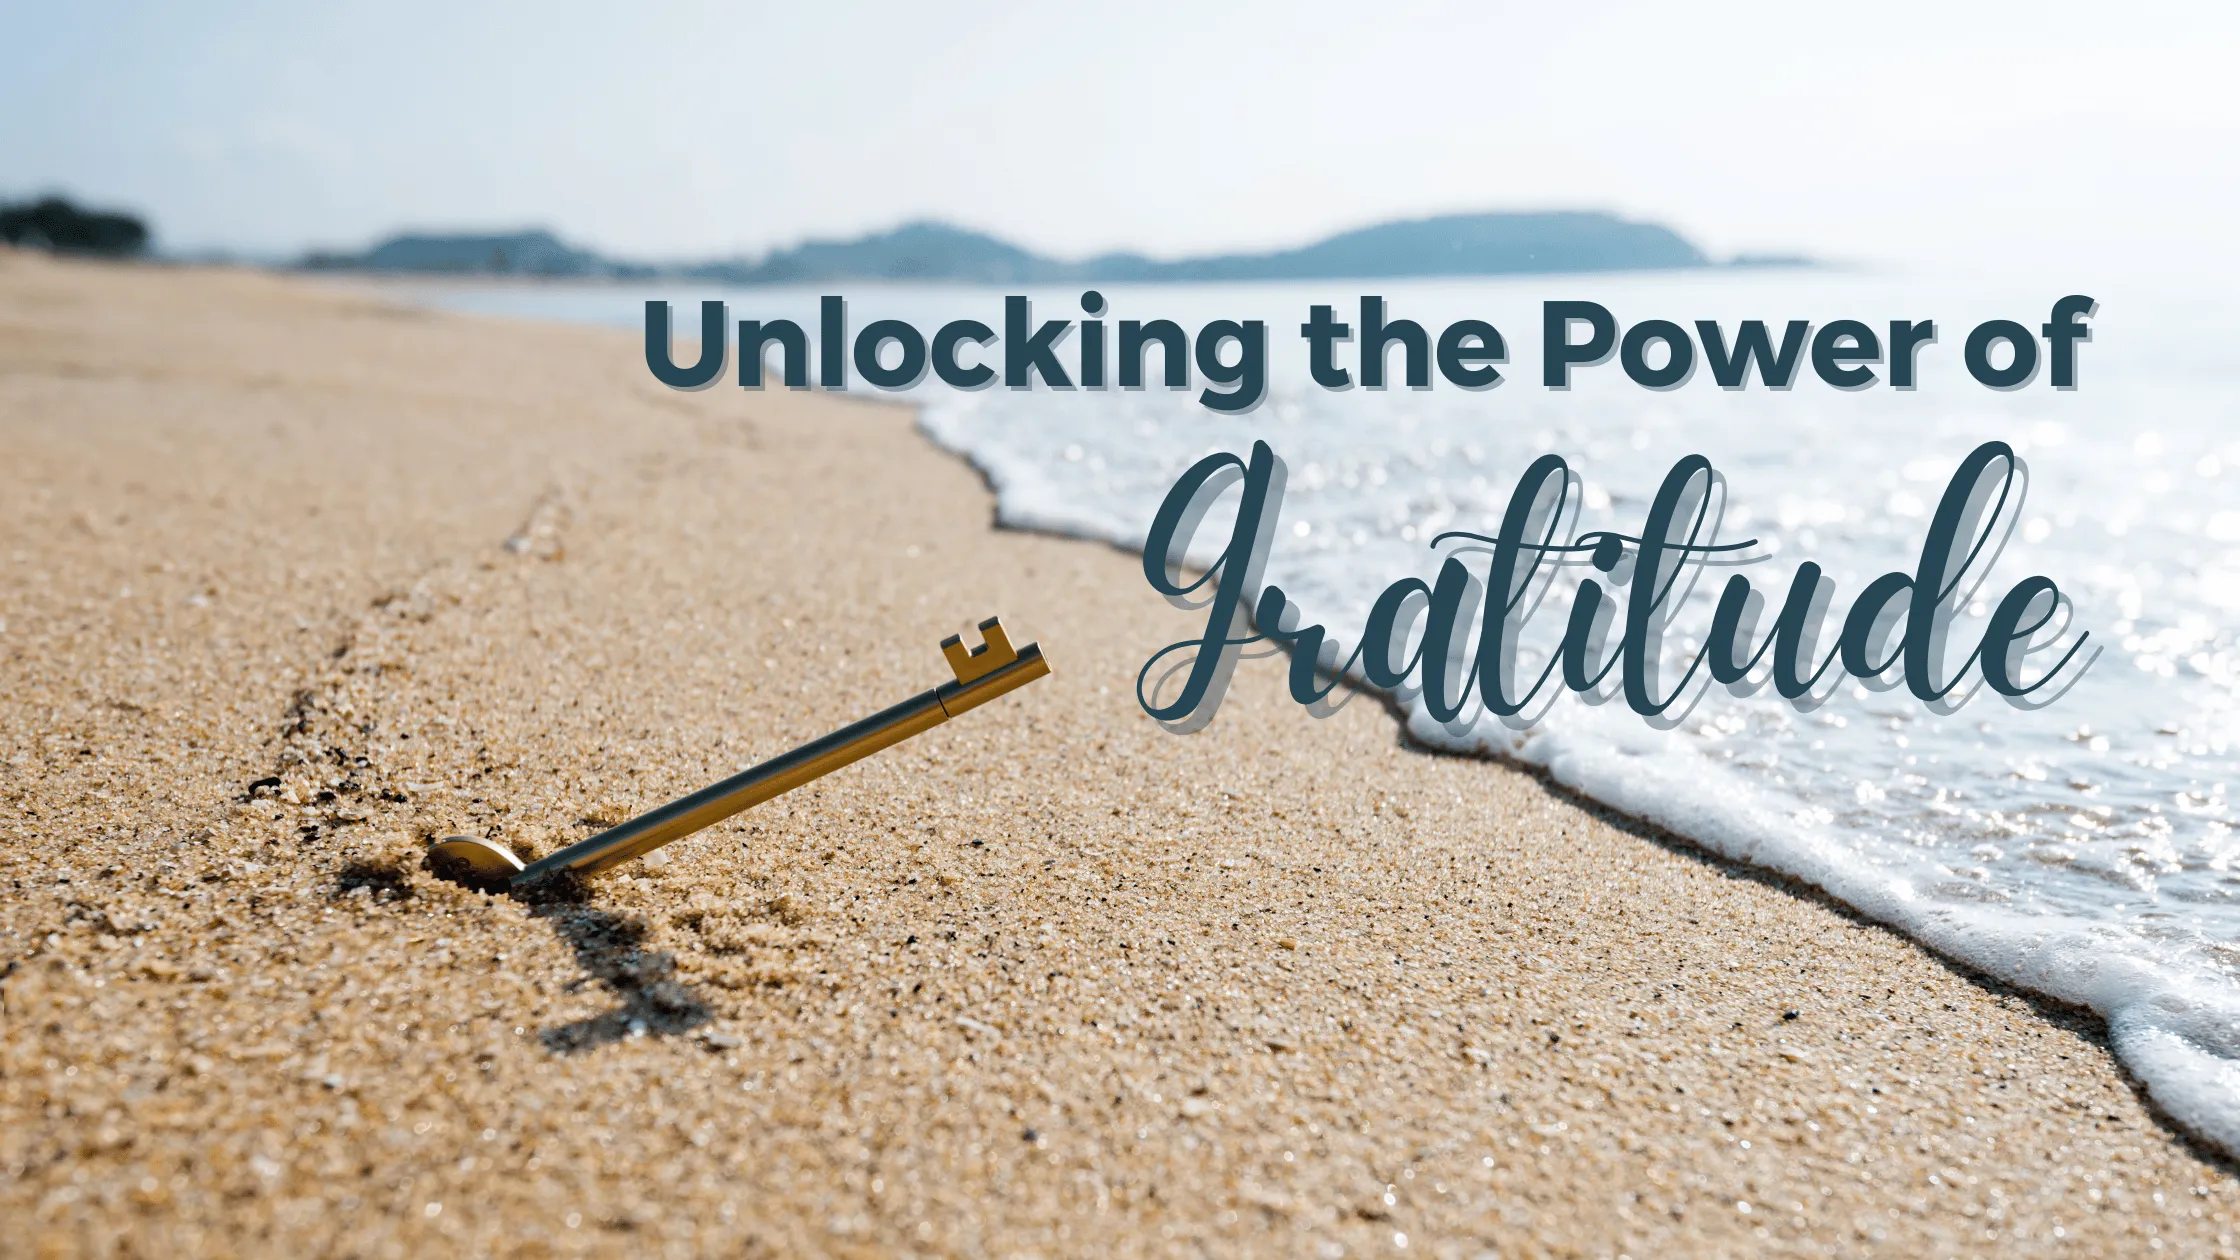 Unlocking the Power of Gratitude